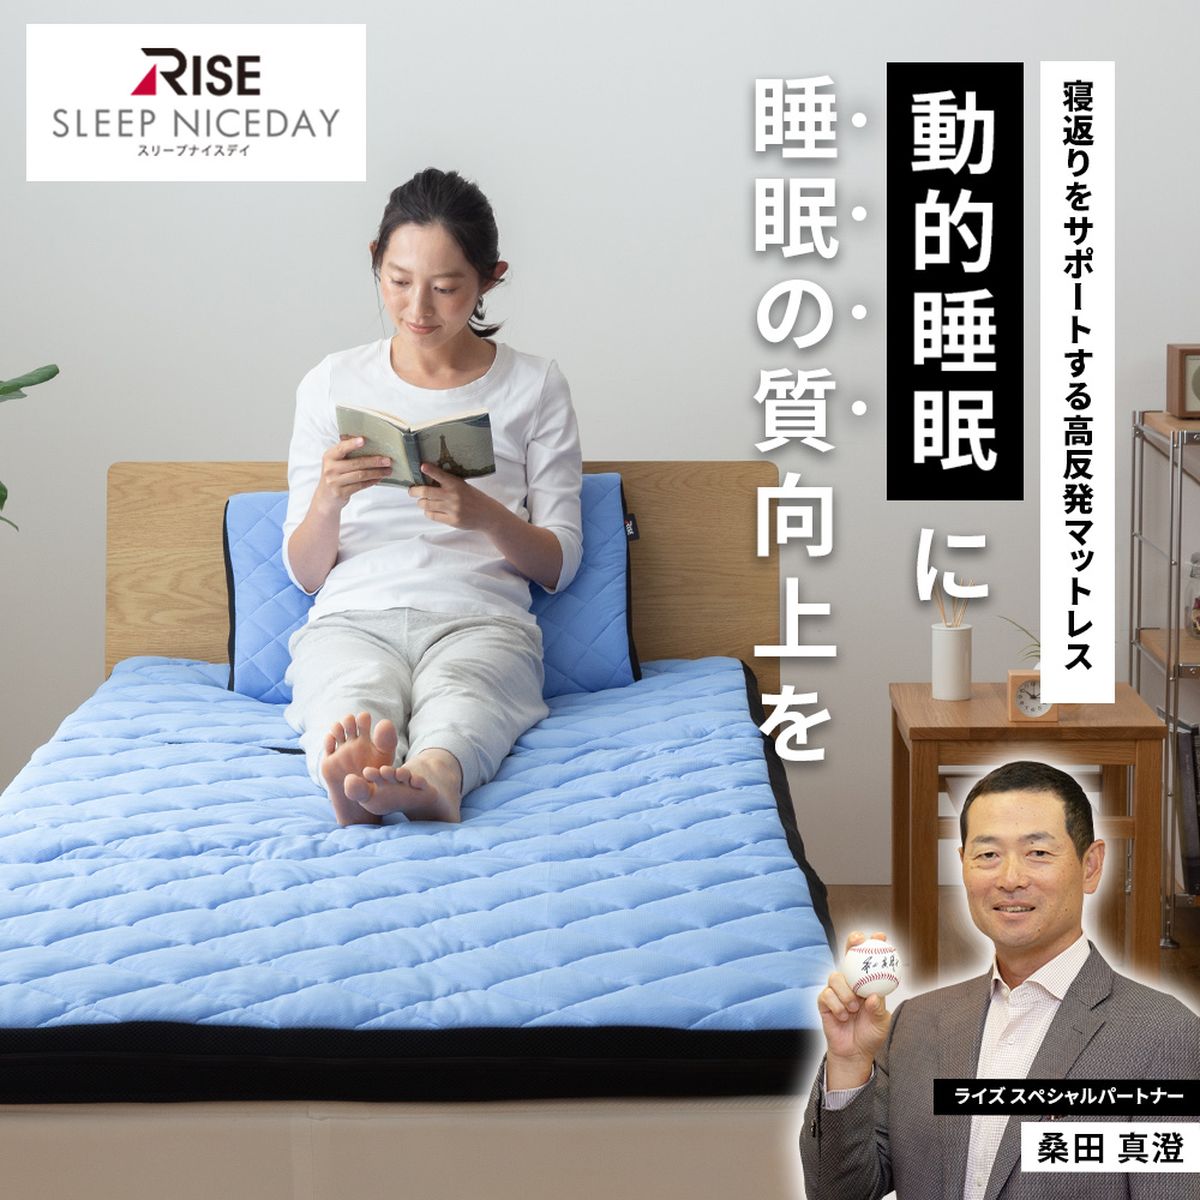 RISE Sleep Niceday 桑田真澄式 動的睡眠 高反発マットレス6cm シングル グレー